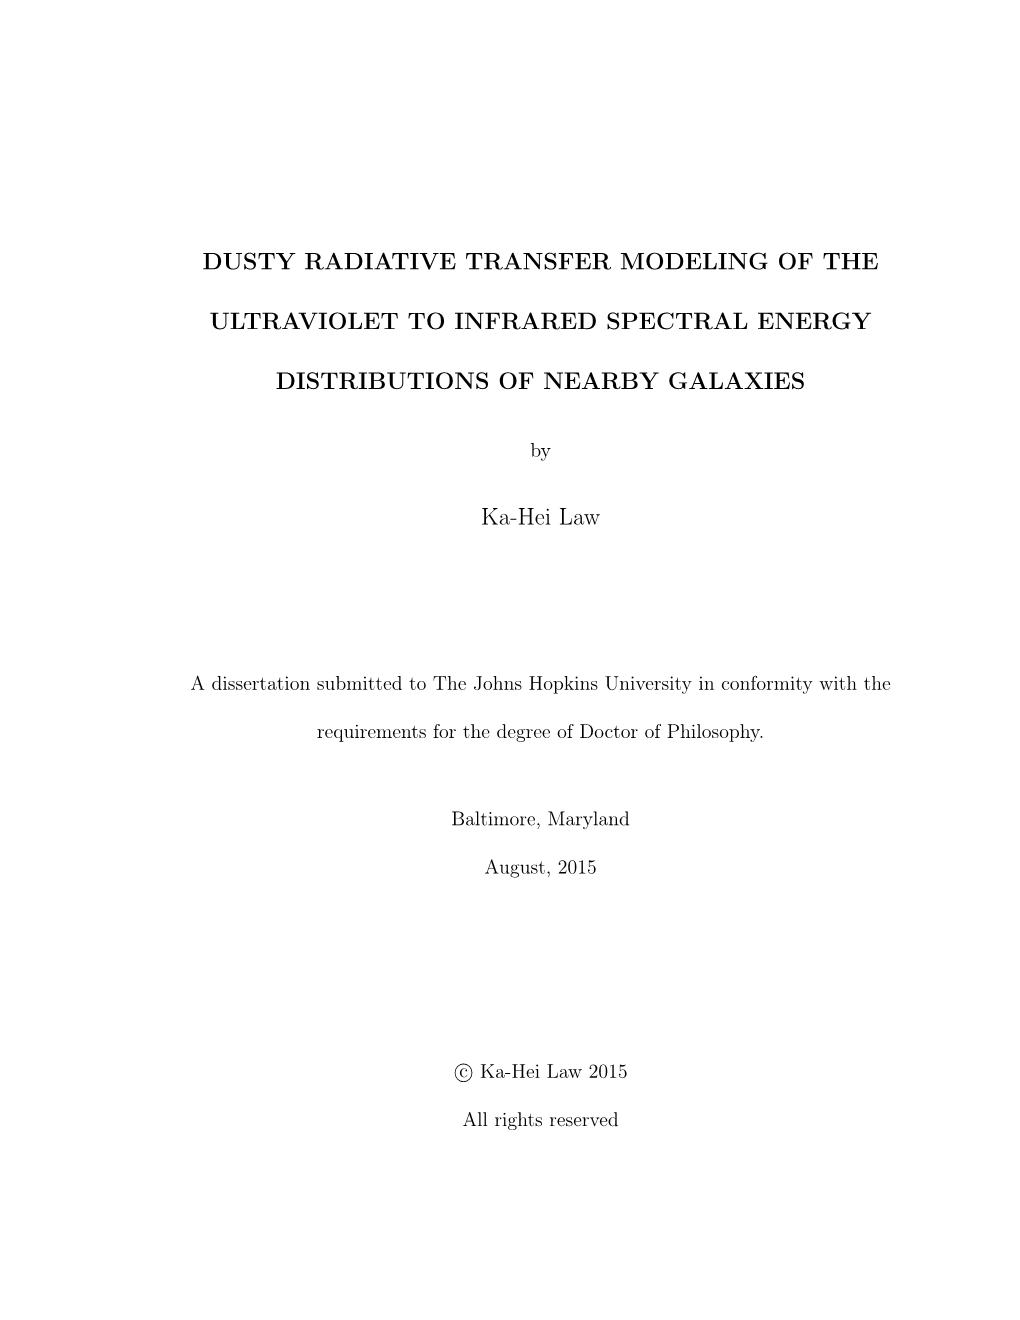 Dusty Radiative Transfer Modeling of the Ultraviolet